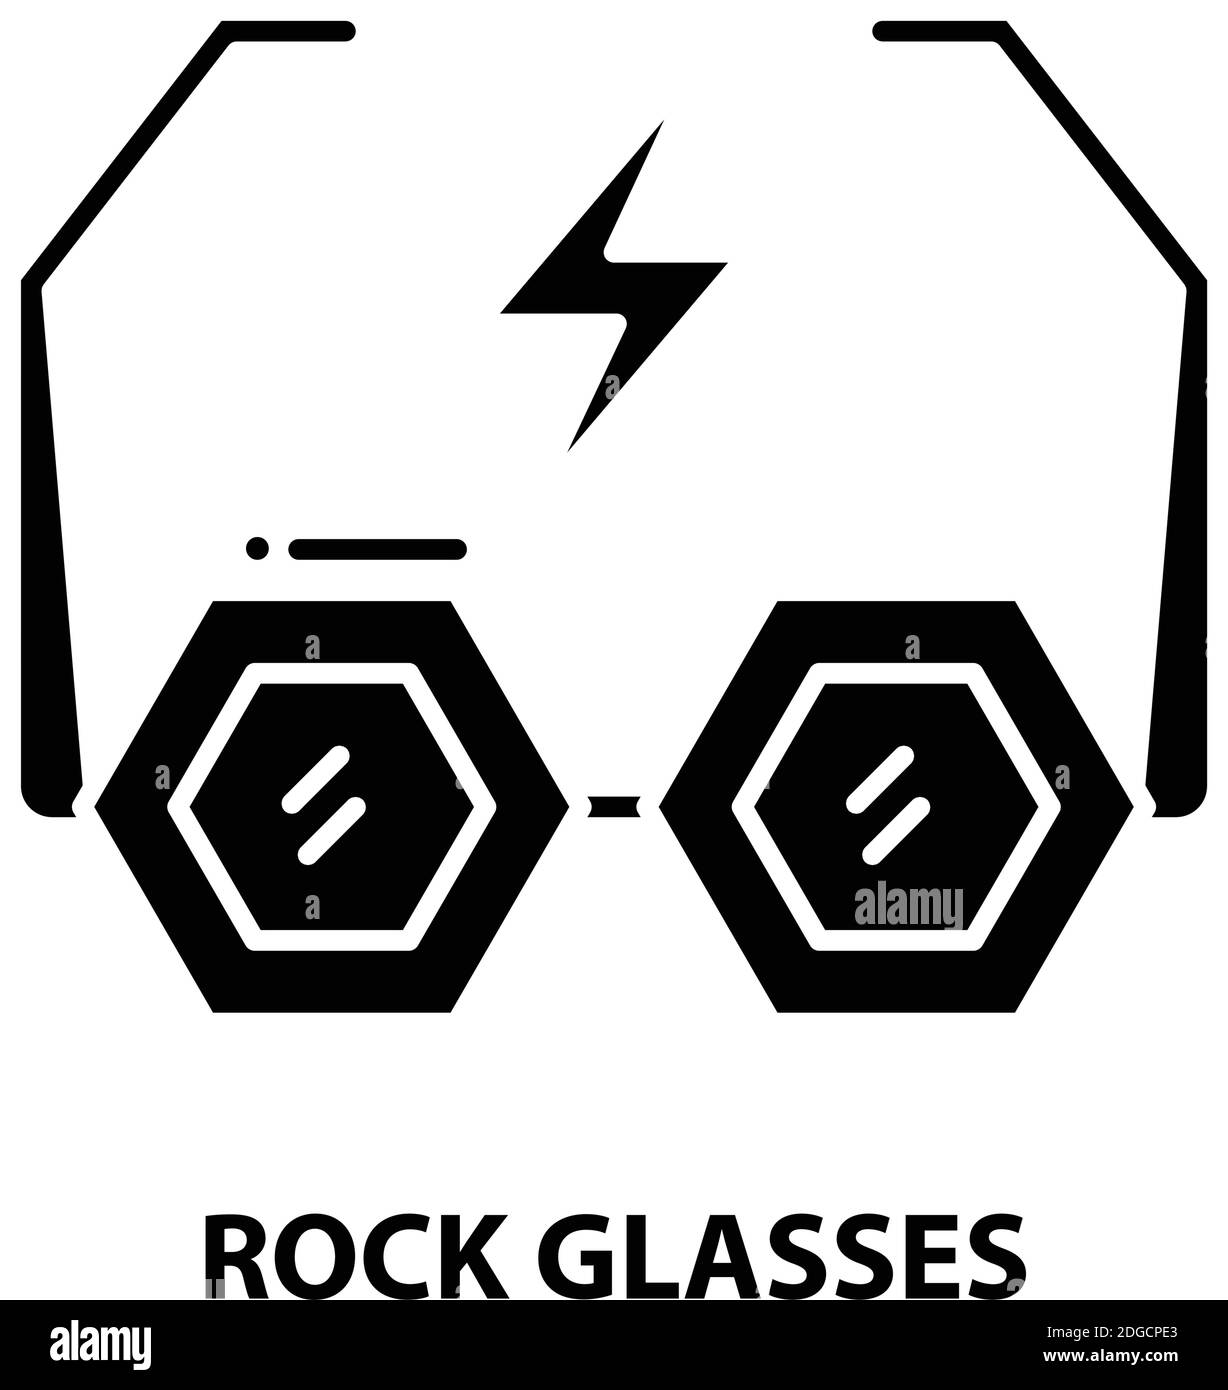 https://c8.alamy.com/comp/2DGCPE3/rock-glasses-icon-black-vector-sign-with-editable-strokes-concept-illustration-2DGCPE3.jpg